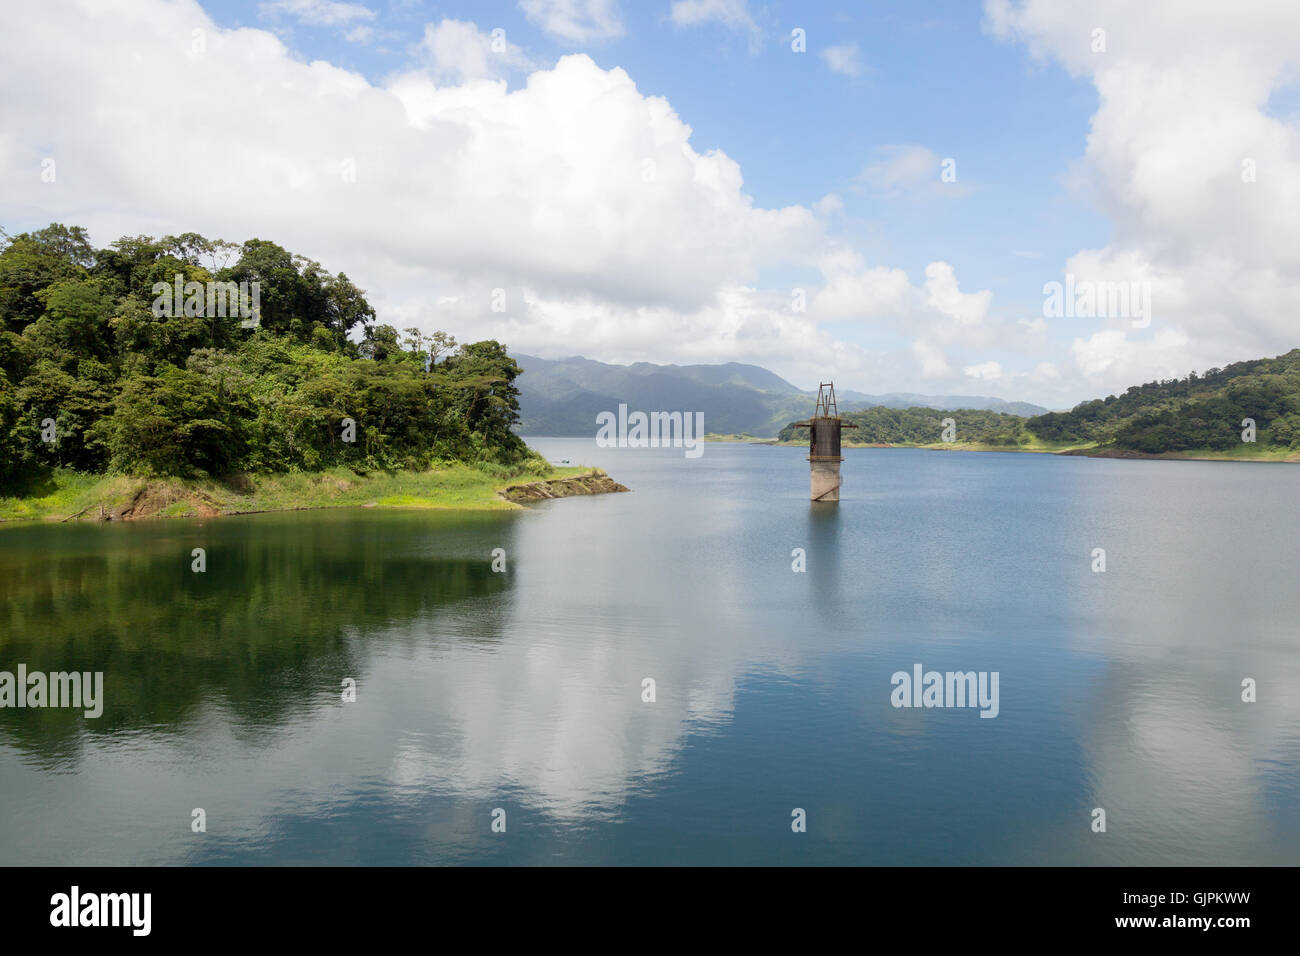 Arenal-See mit alten Damm Reste, Arenal, Costa Rica, Mittelamerika Stockfoto